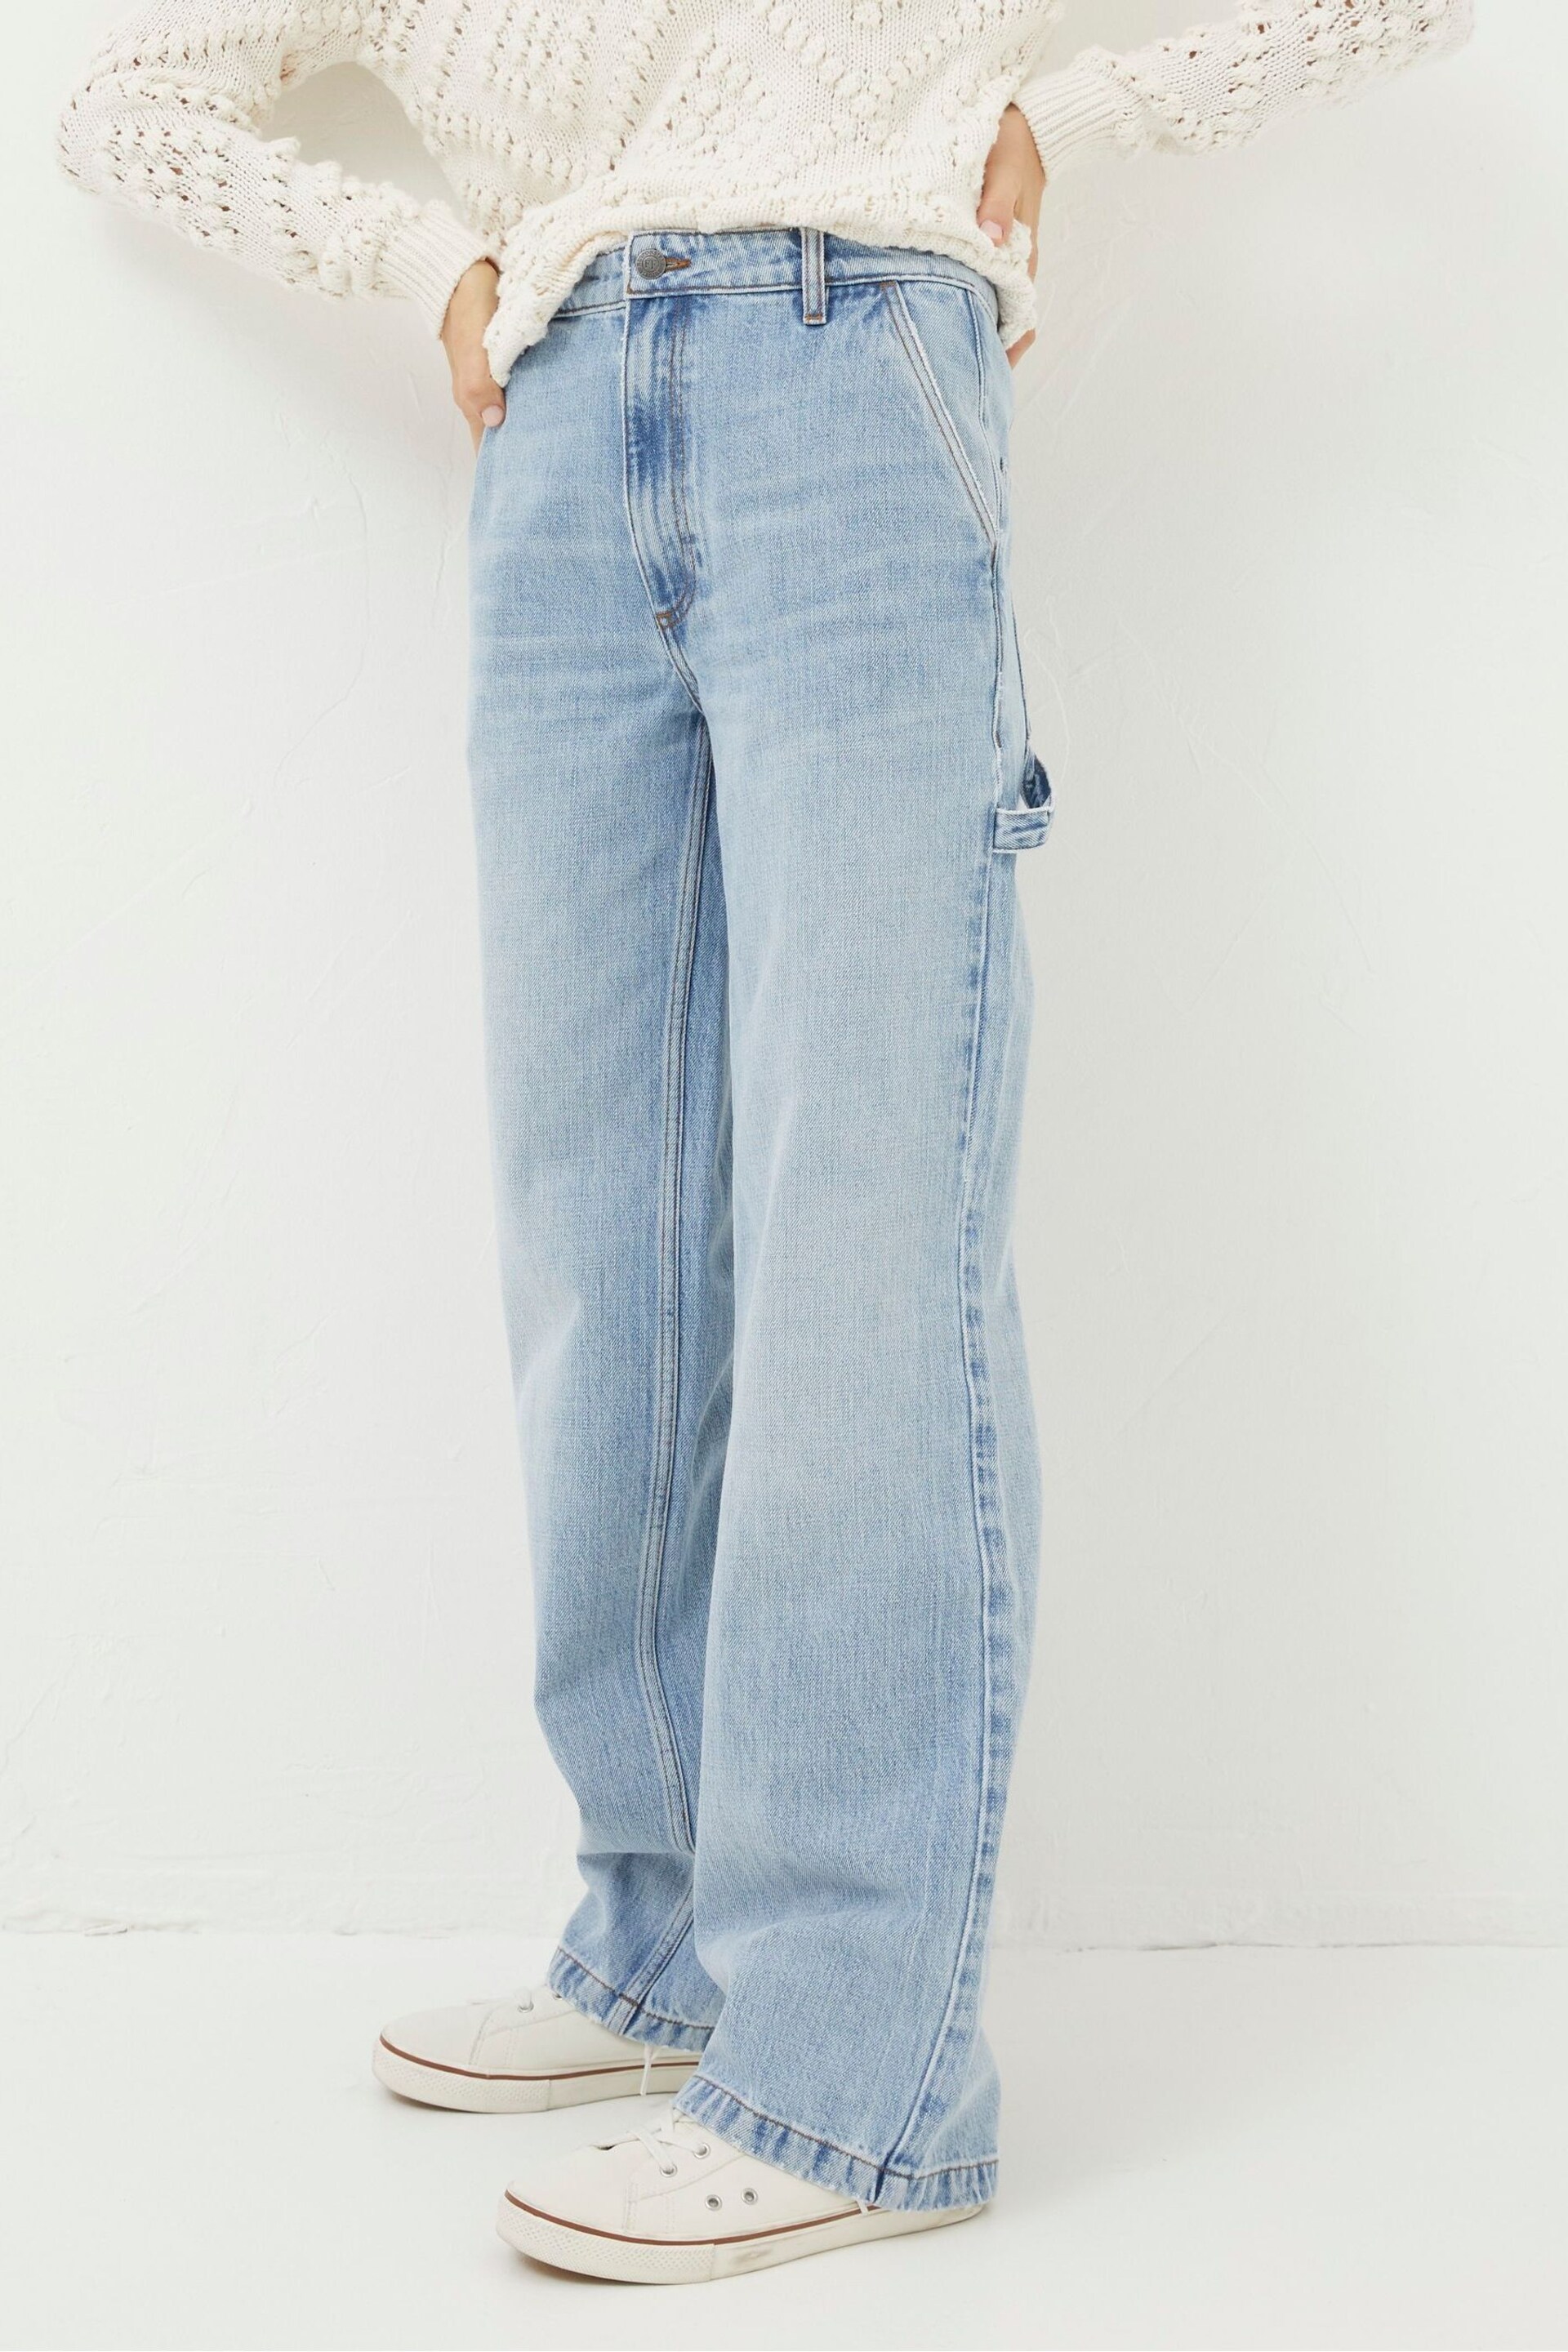 FatFace Blue Caris Carpenter Jeans - Image 3 of 5